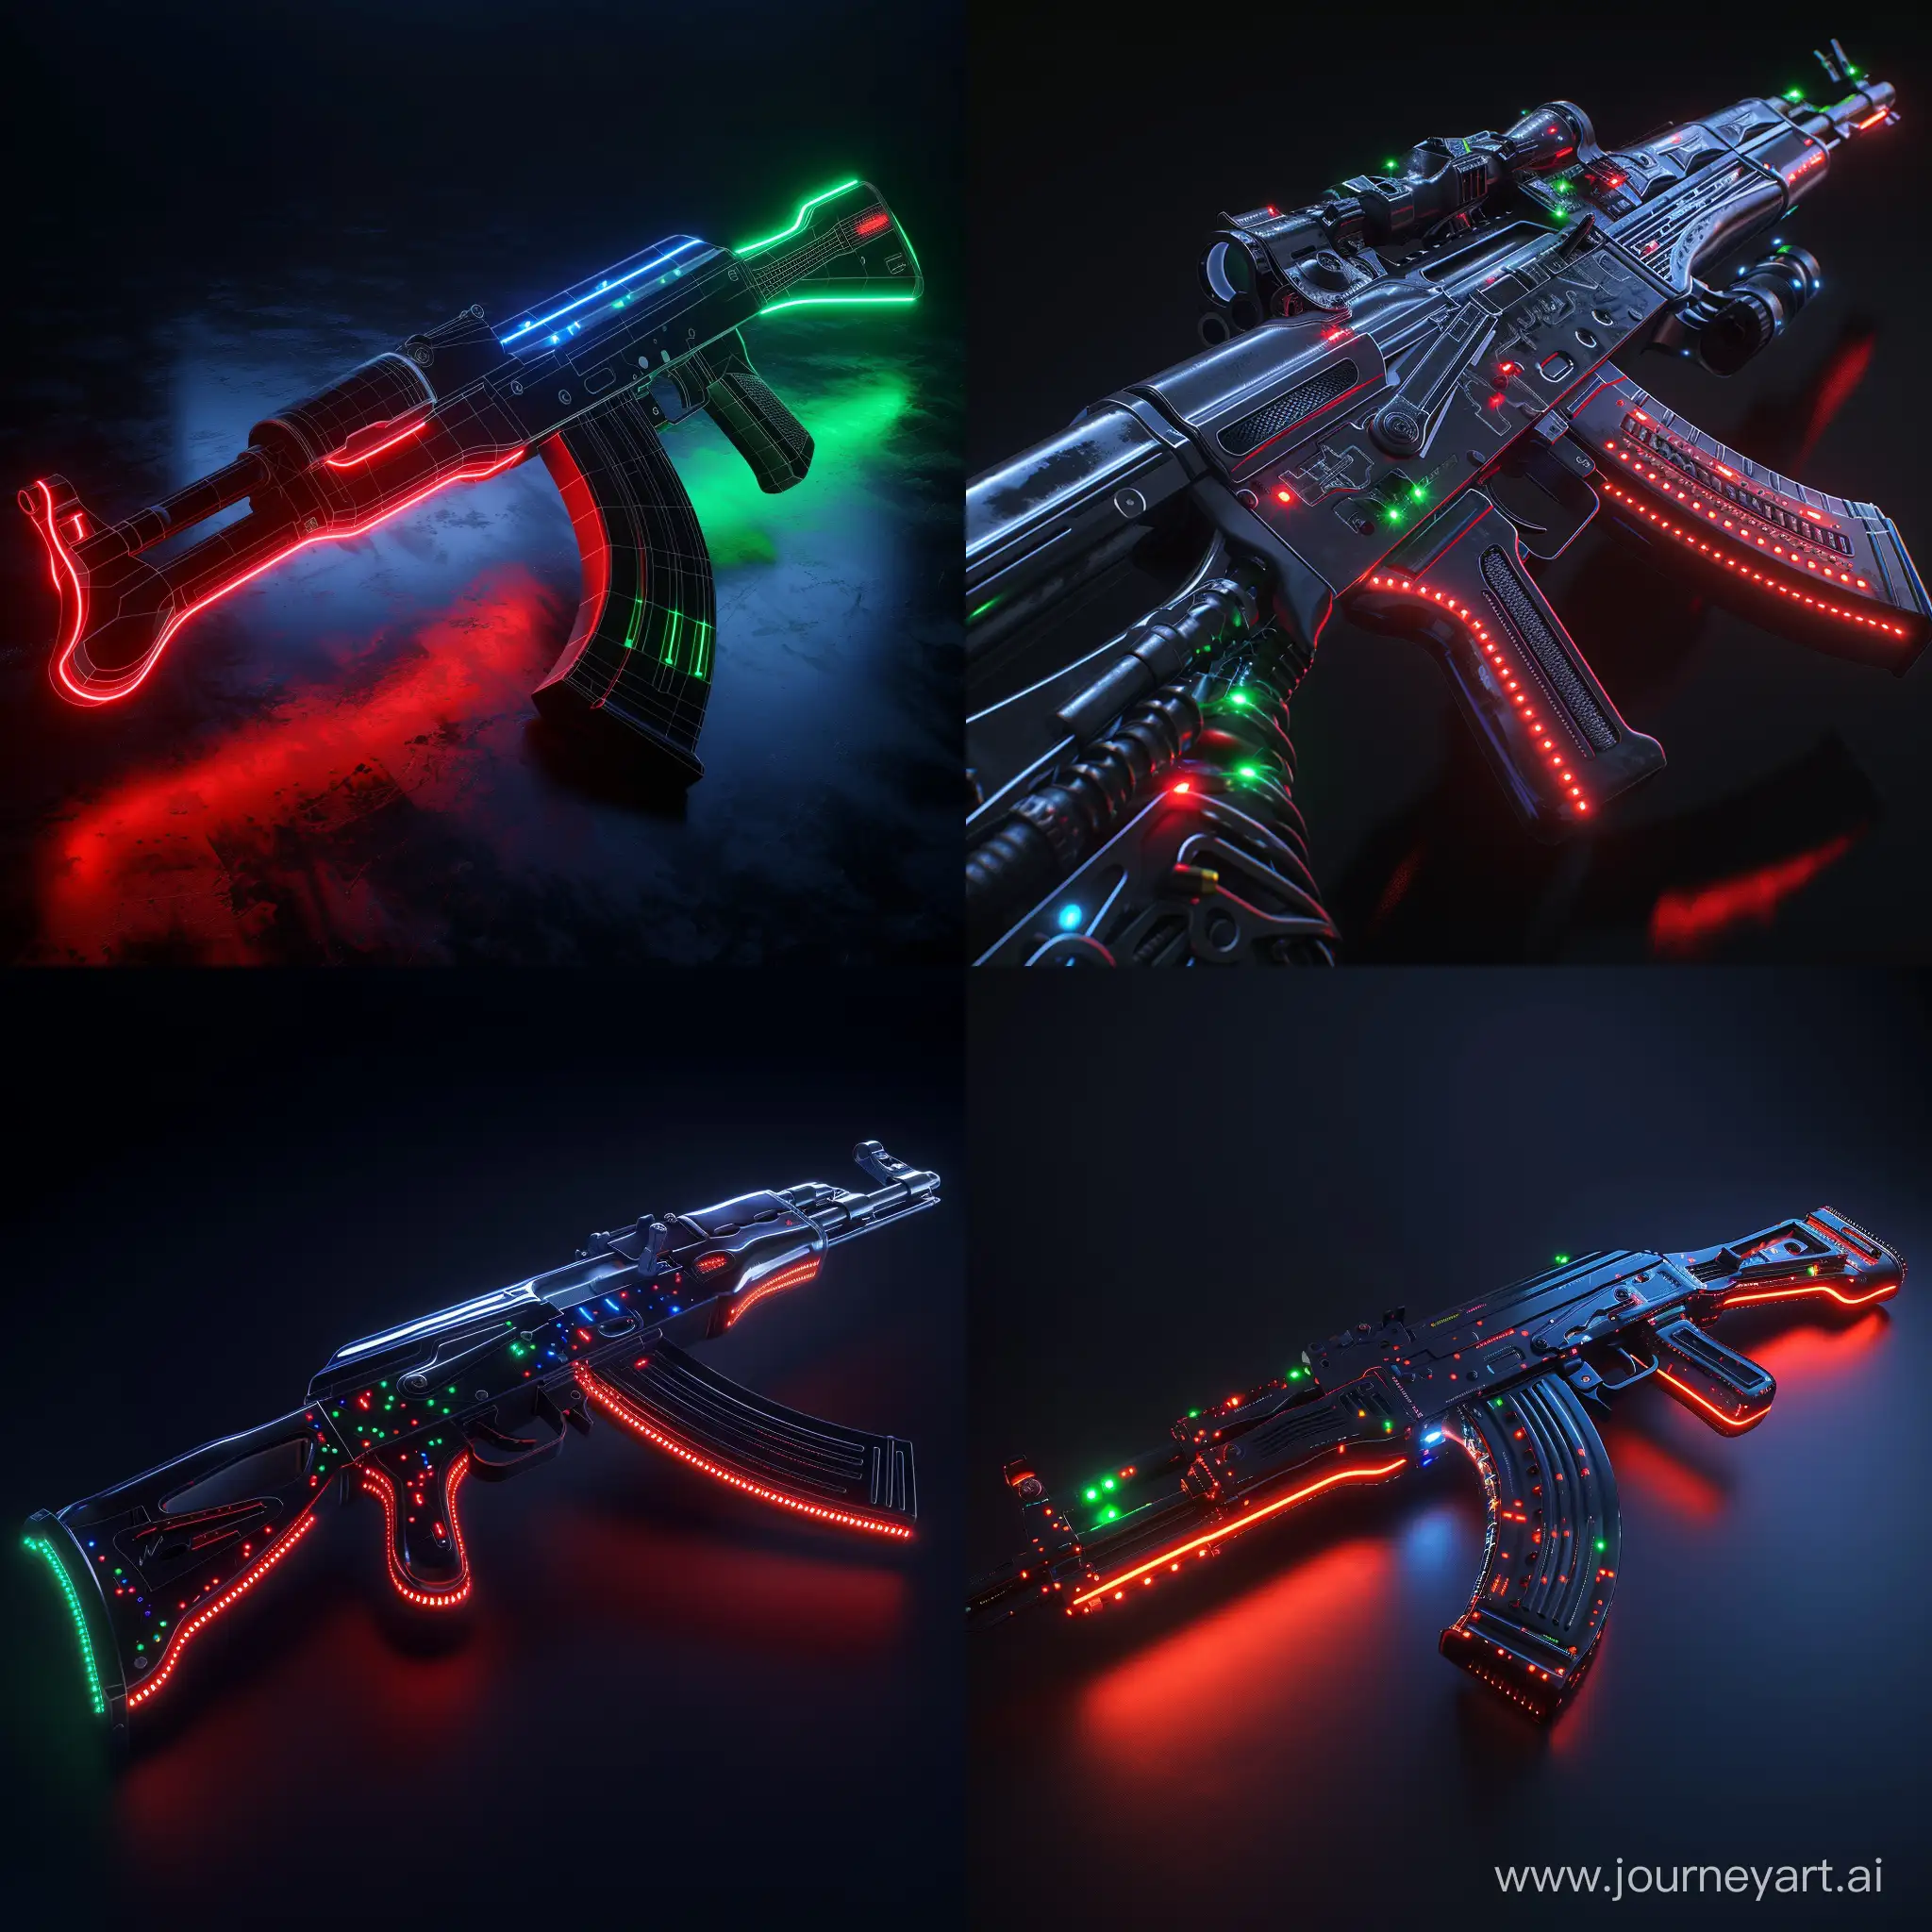 Futuristic AK-47, octane render, red LEDs, green LEDs, blue LEDs, LED strips